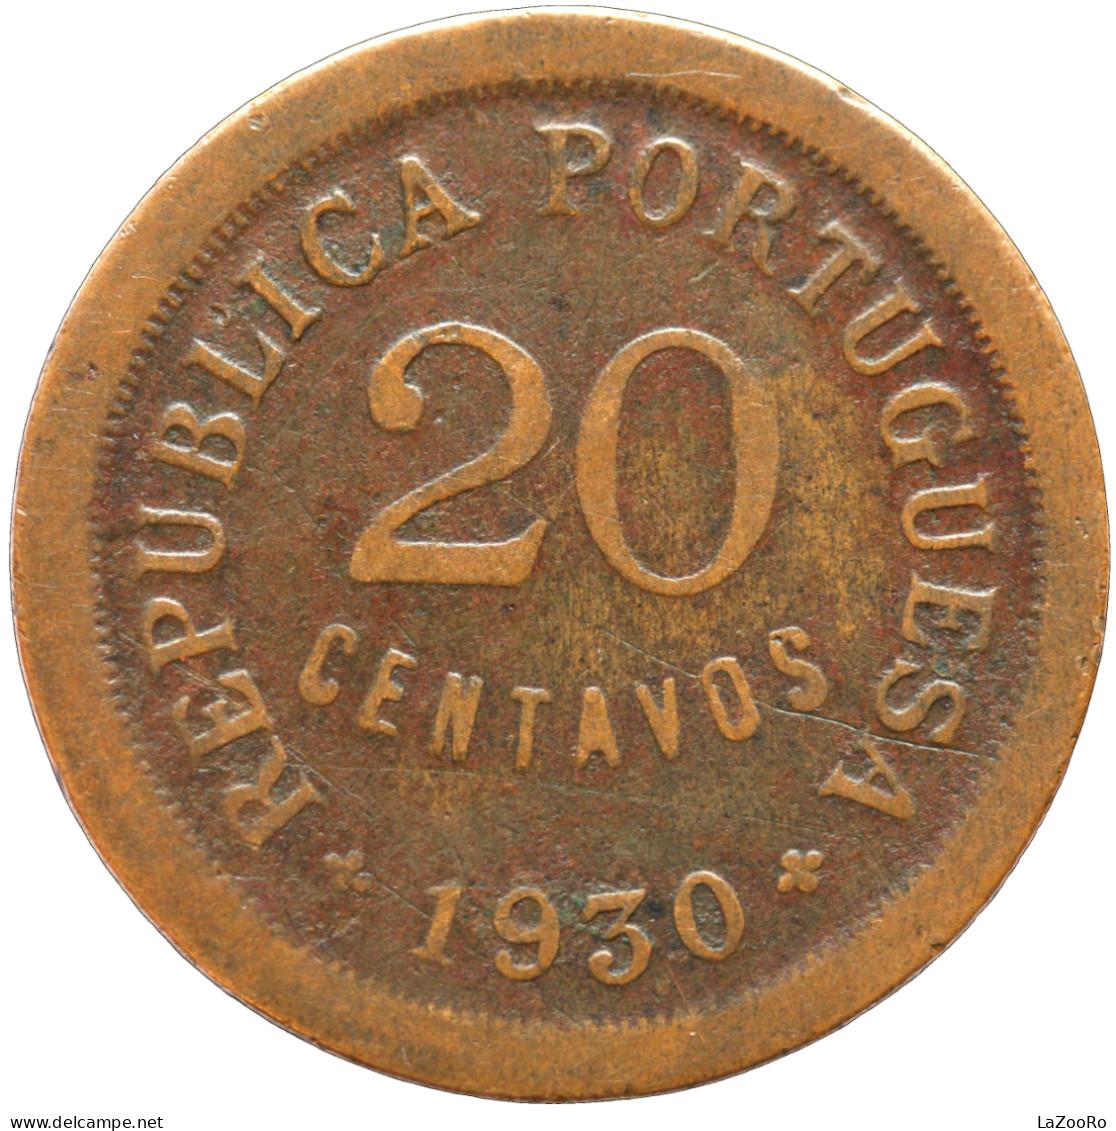 LaZooRo: Portuguese Cape Verde 20 Centavos 1930 VF - Cape Verde